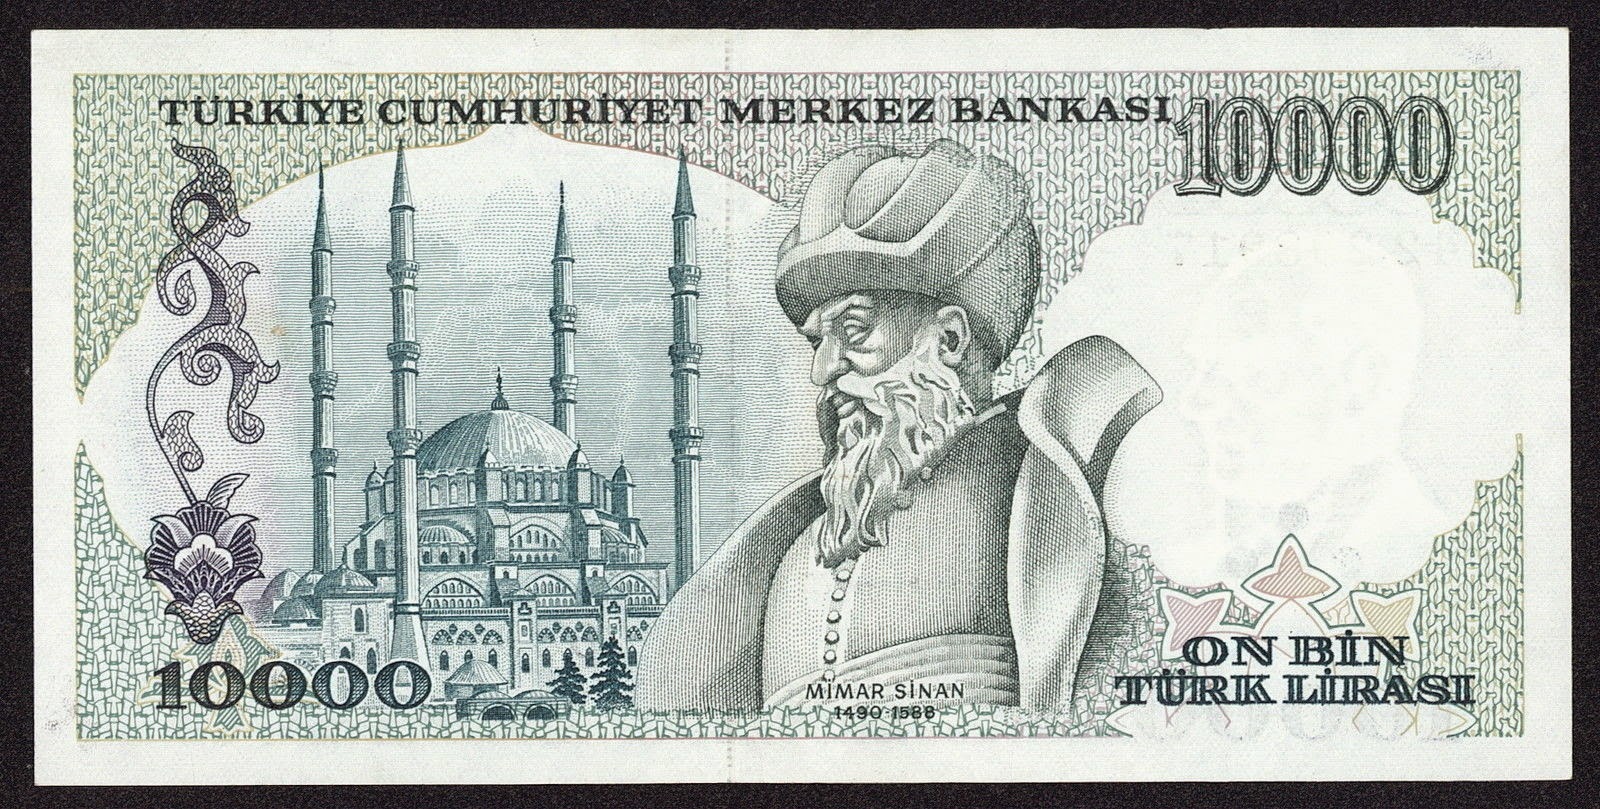 Turkey currency money 10000 Turkish Lira "Türk Lirasi" note 1993 Architect Sinan and his work of art Selimiye Mosque in Edirne